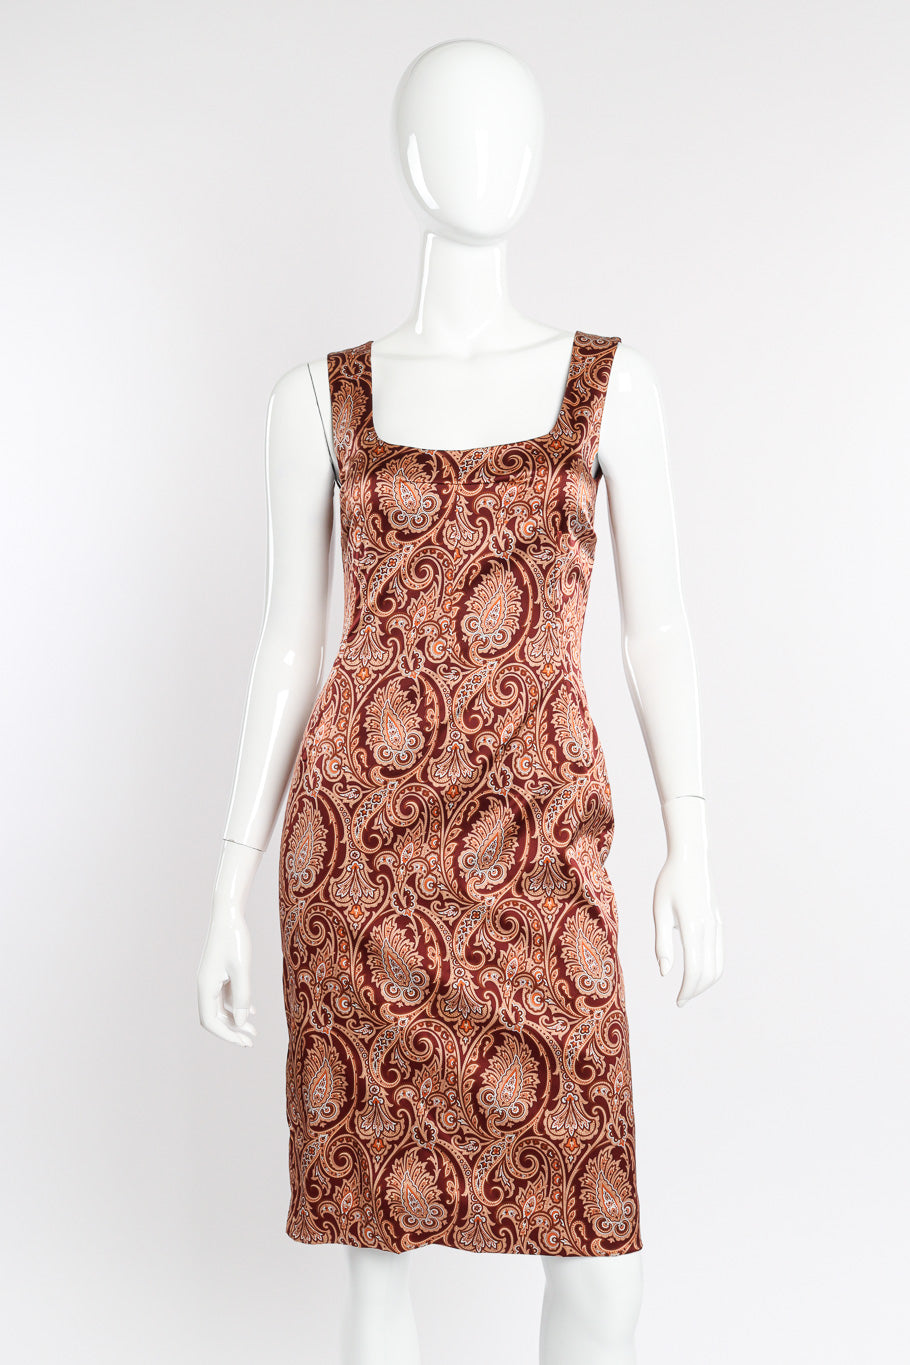 Sheath dress by Dolce & Gabbana on mannequin front far @recessla